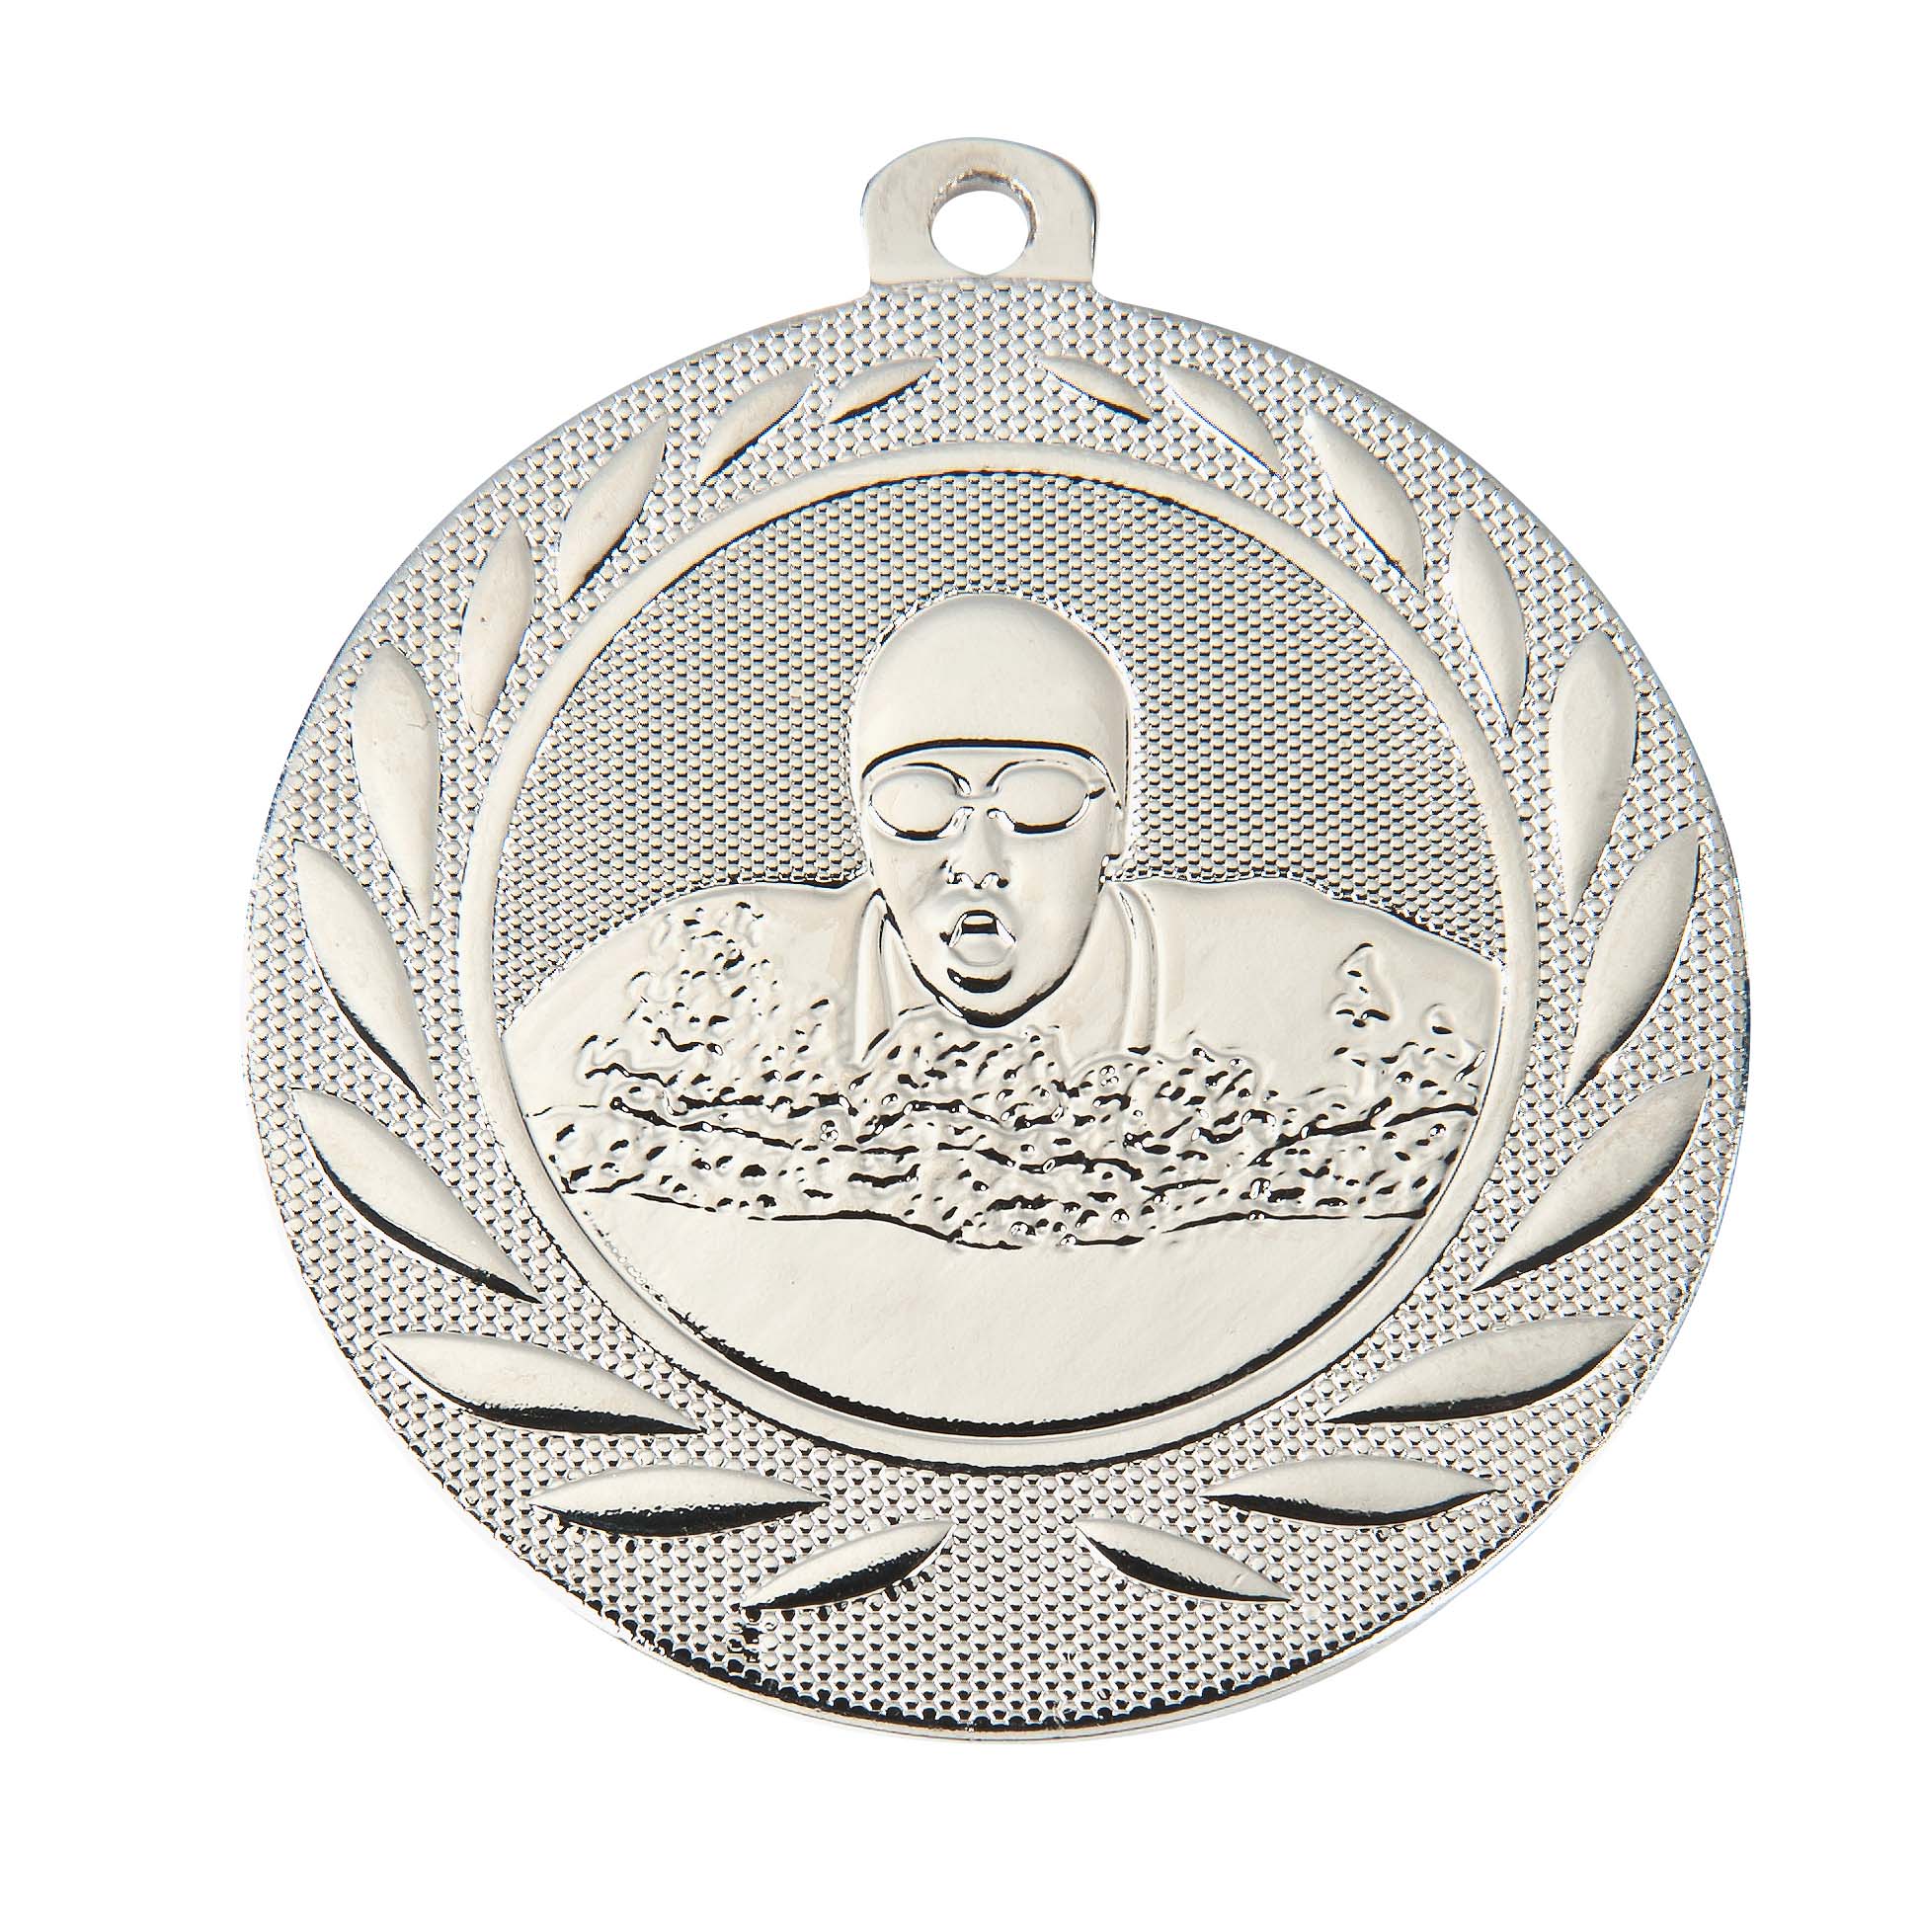 Schwimm-Medaille DI5000H inkl. Band und Beschriftung Silber Unmontiert